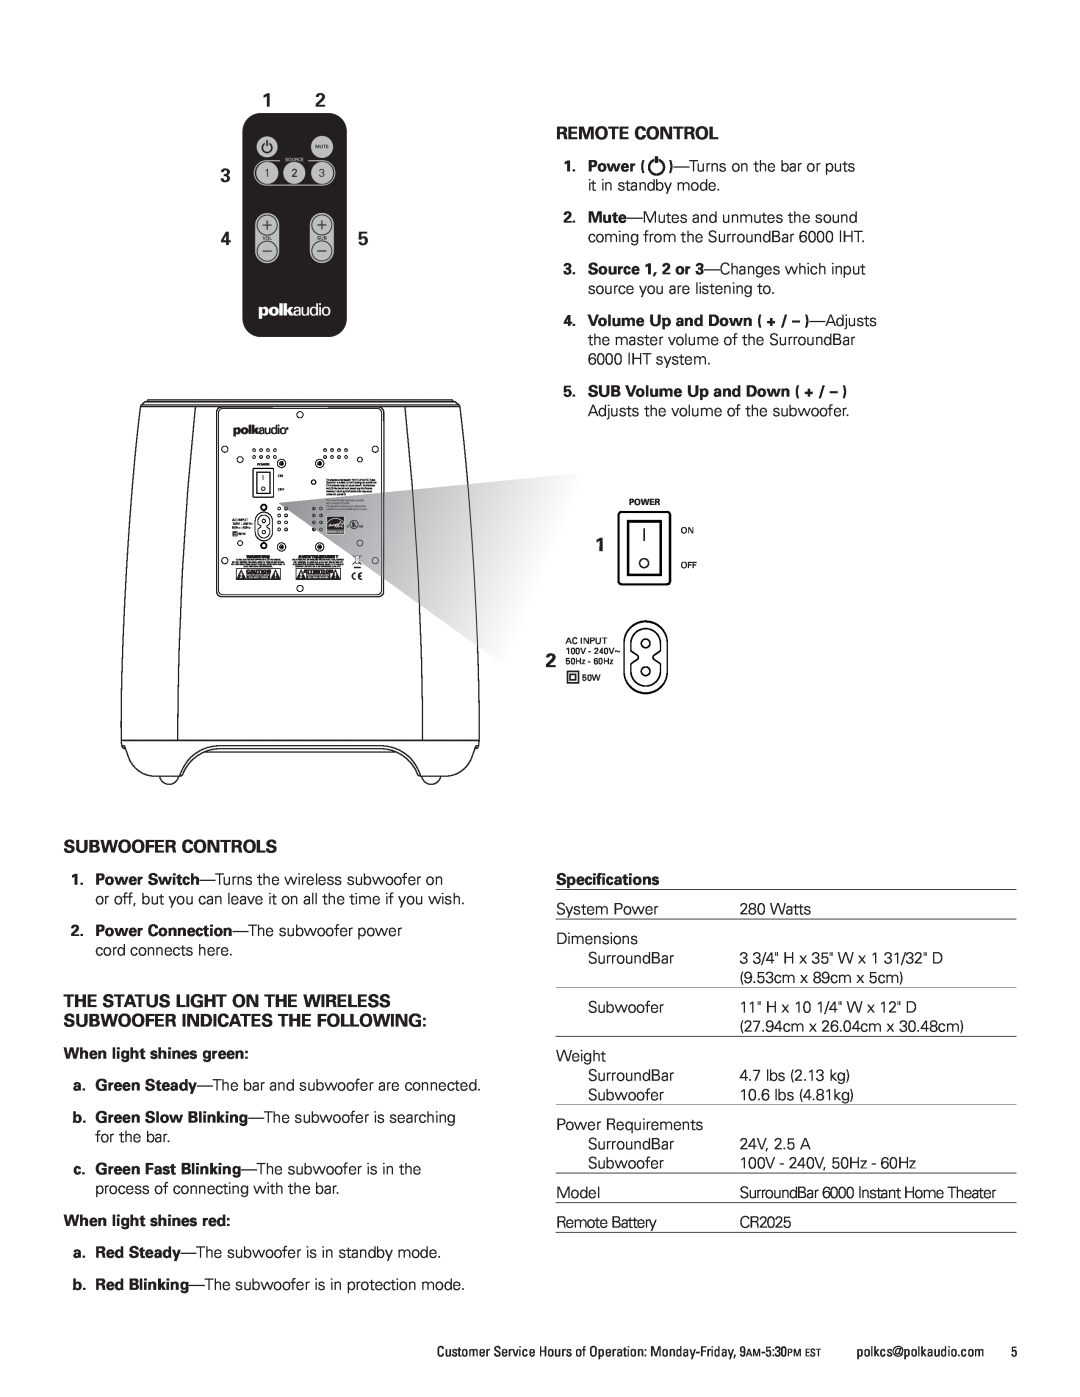 Polk Audio 6000 manual Remote Control, Subwoofer Controls 